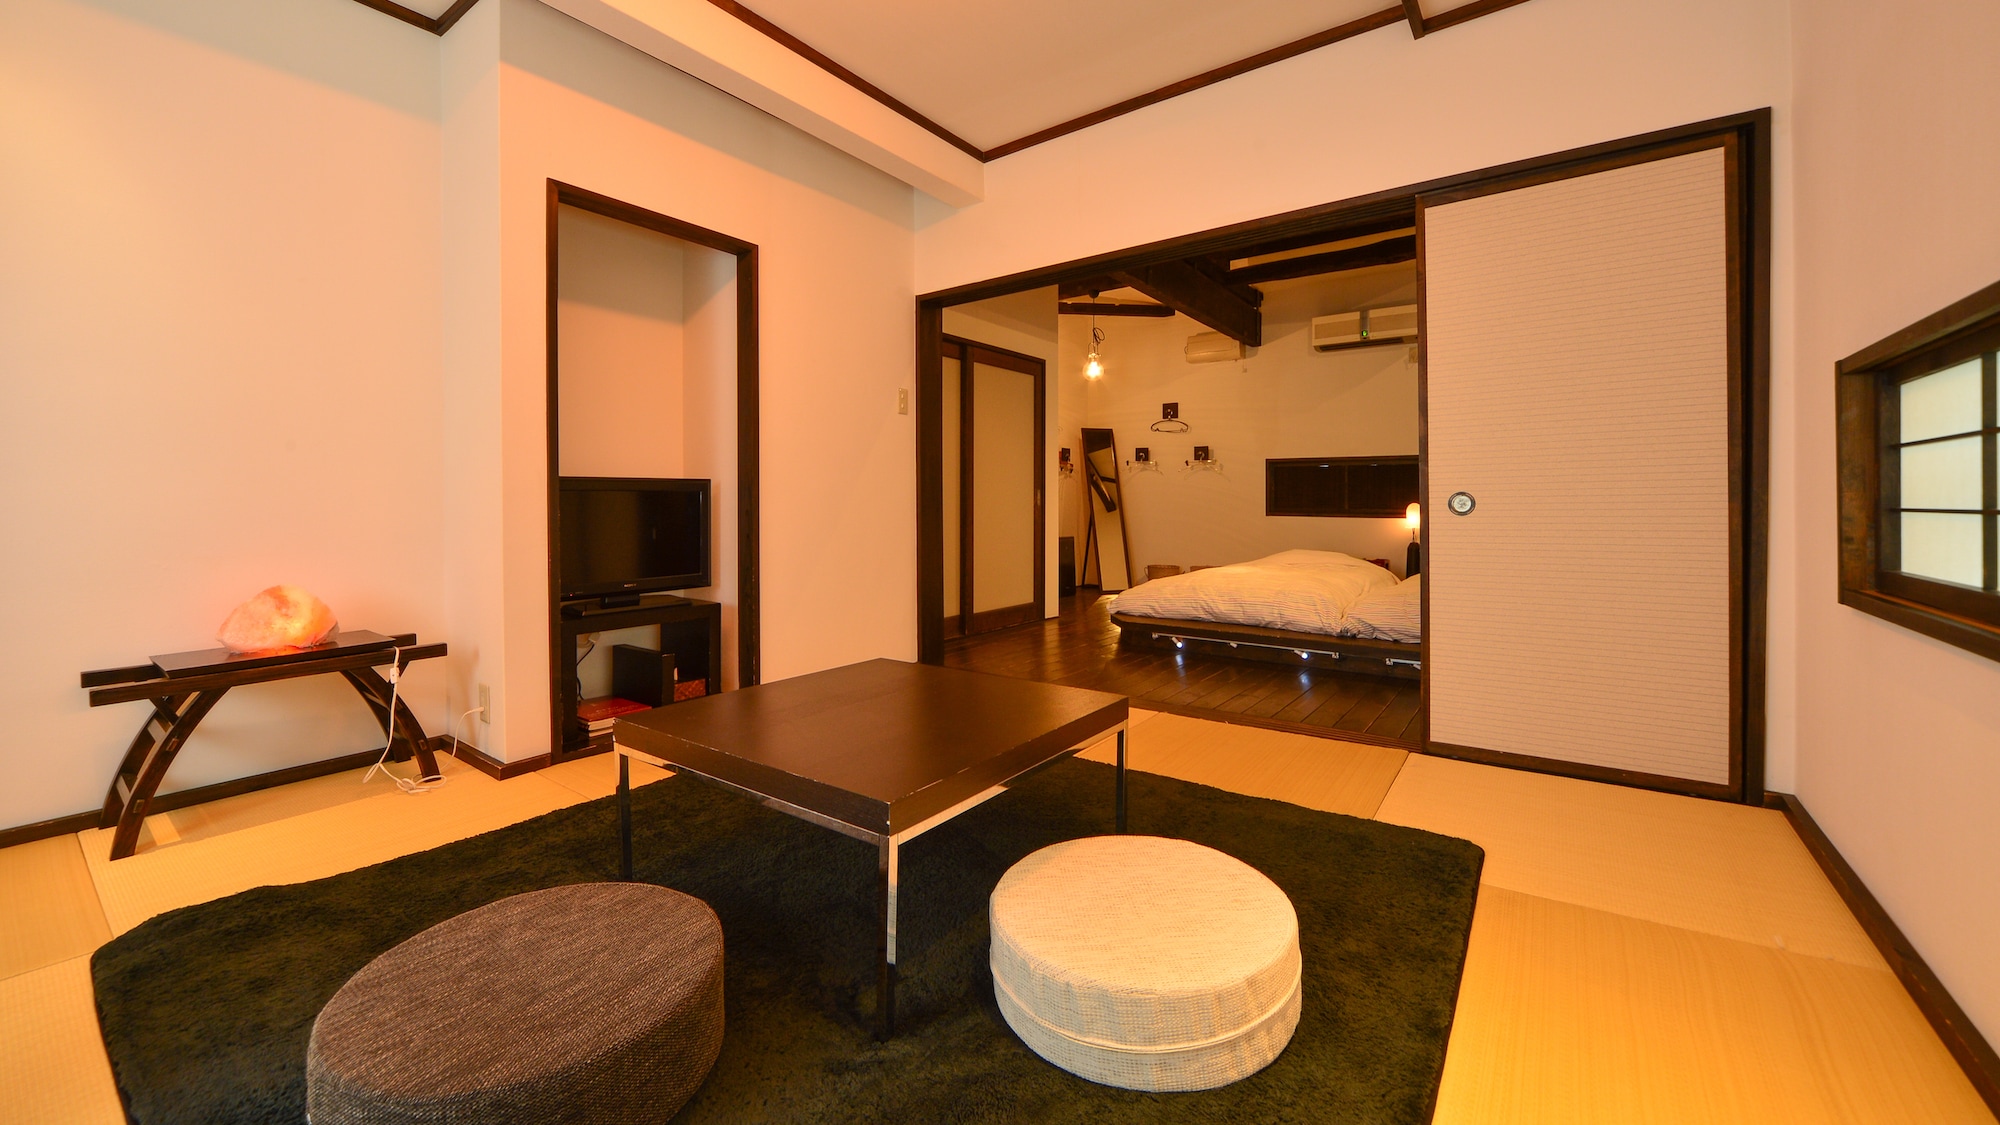 Kagirohi 日式和西式房间 设计师风格的日式房间 8 张榻榻米 + 卧室 8 张榻榻米